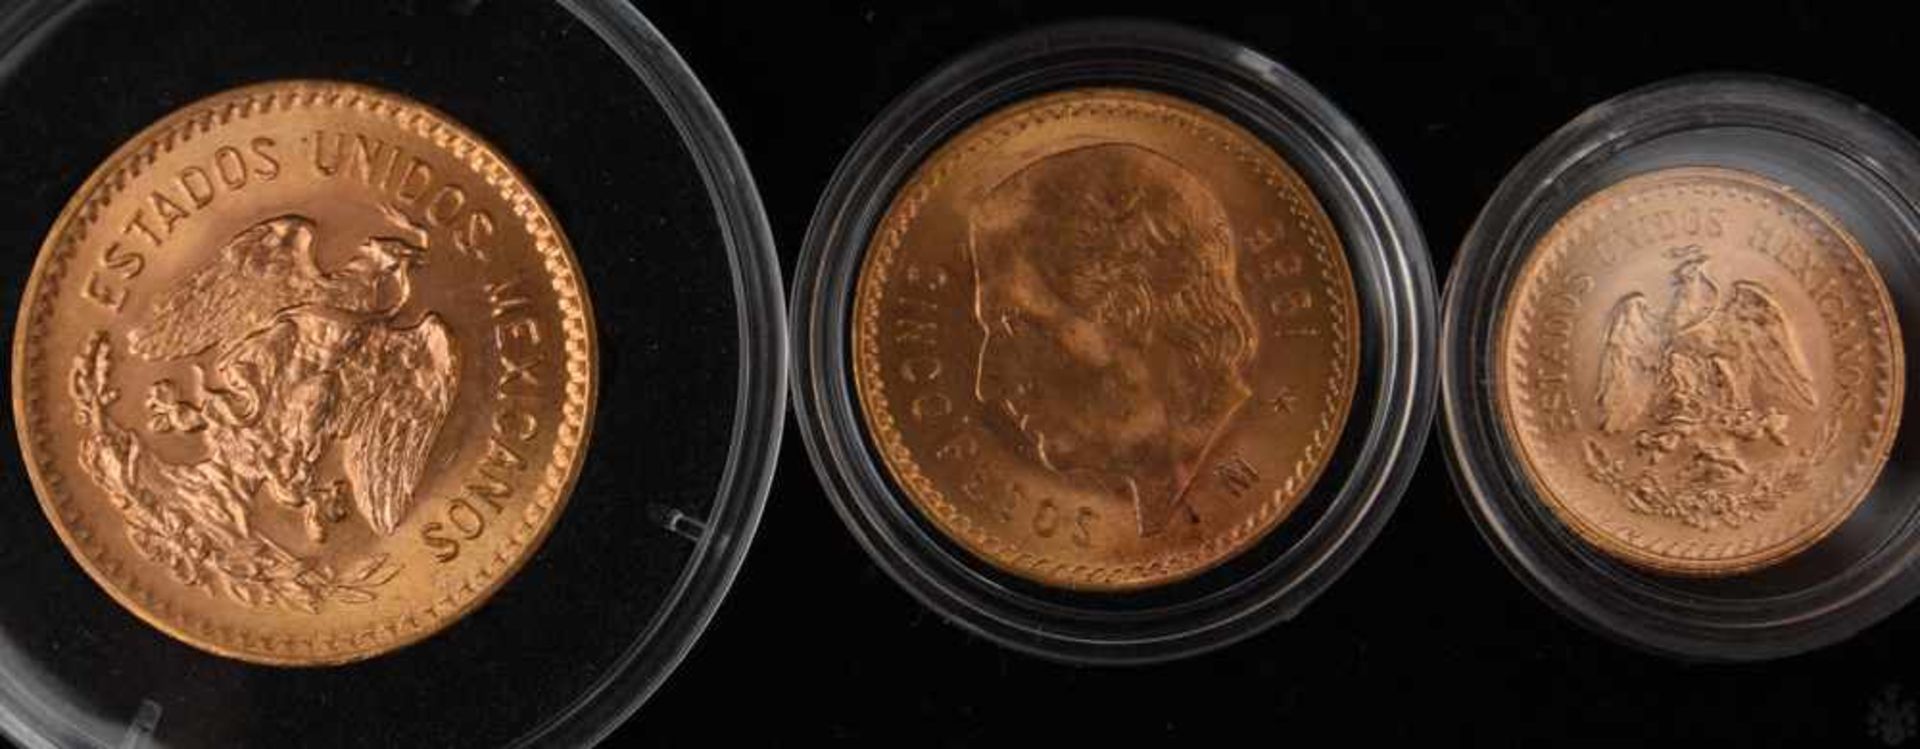 GOLDMÜNZEN, Konvolut Mexico Pesos Gold, 20. Jhd. (11)7 Münzen Mexico1 x 50 Pesos Centenario 41,667 - Bild 8 aus 9